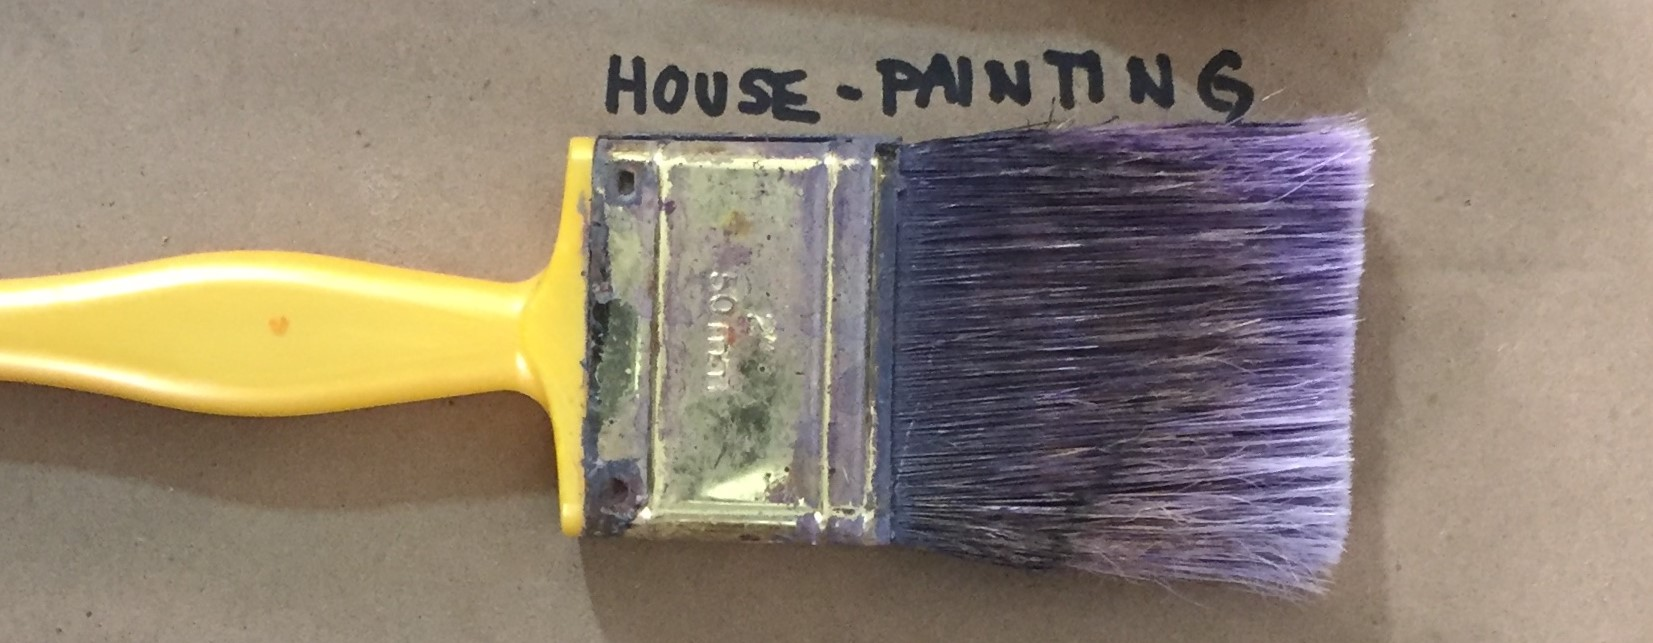 house painting brush